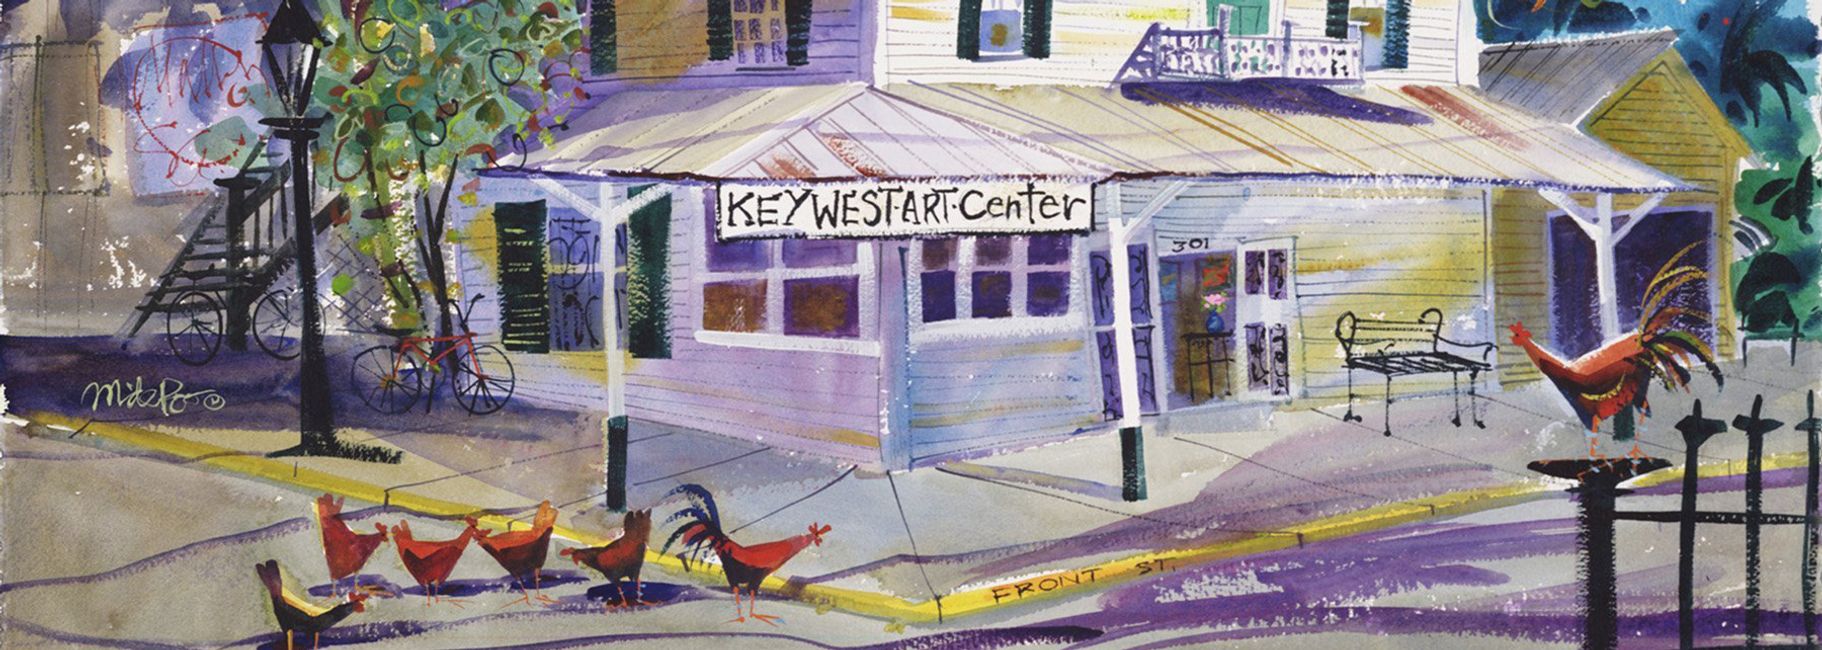 Key West art center